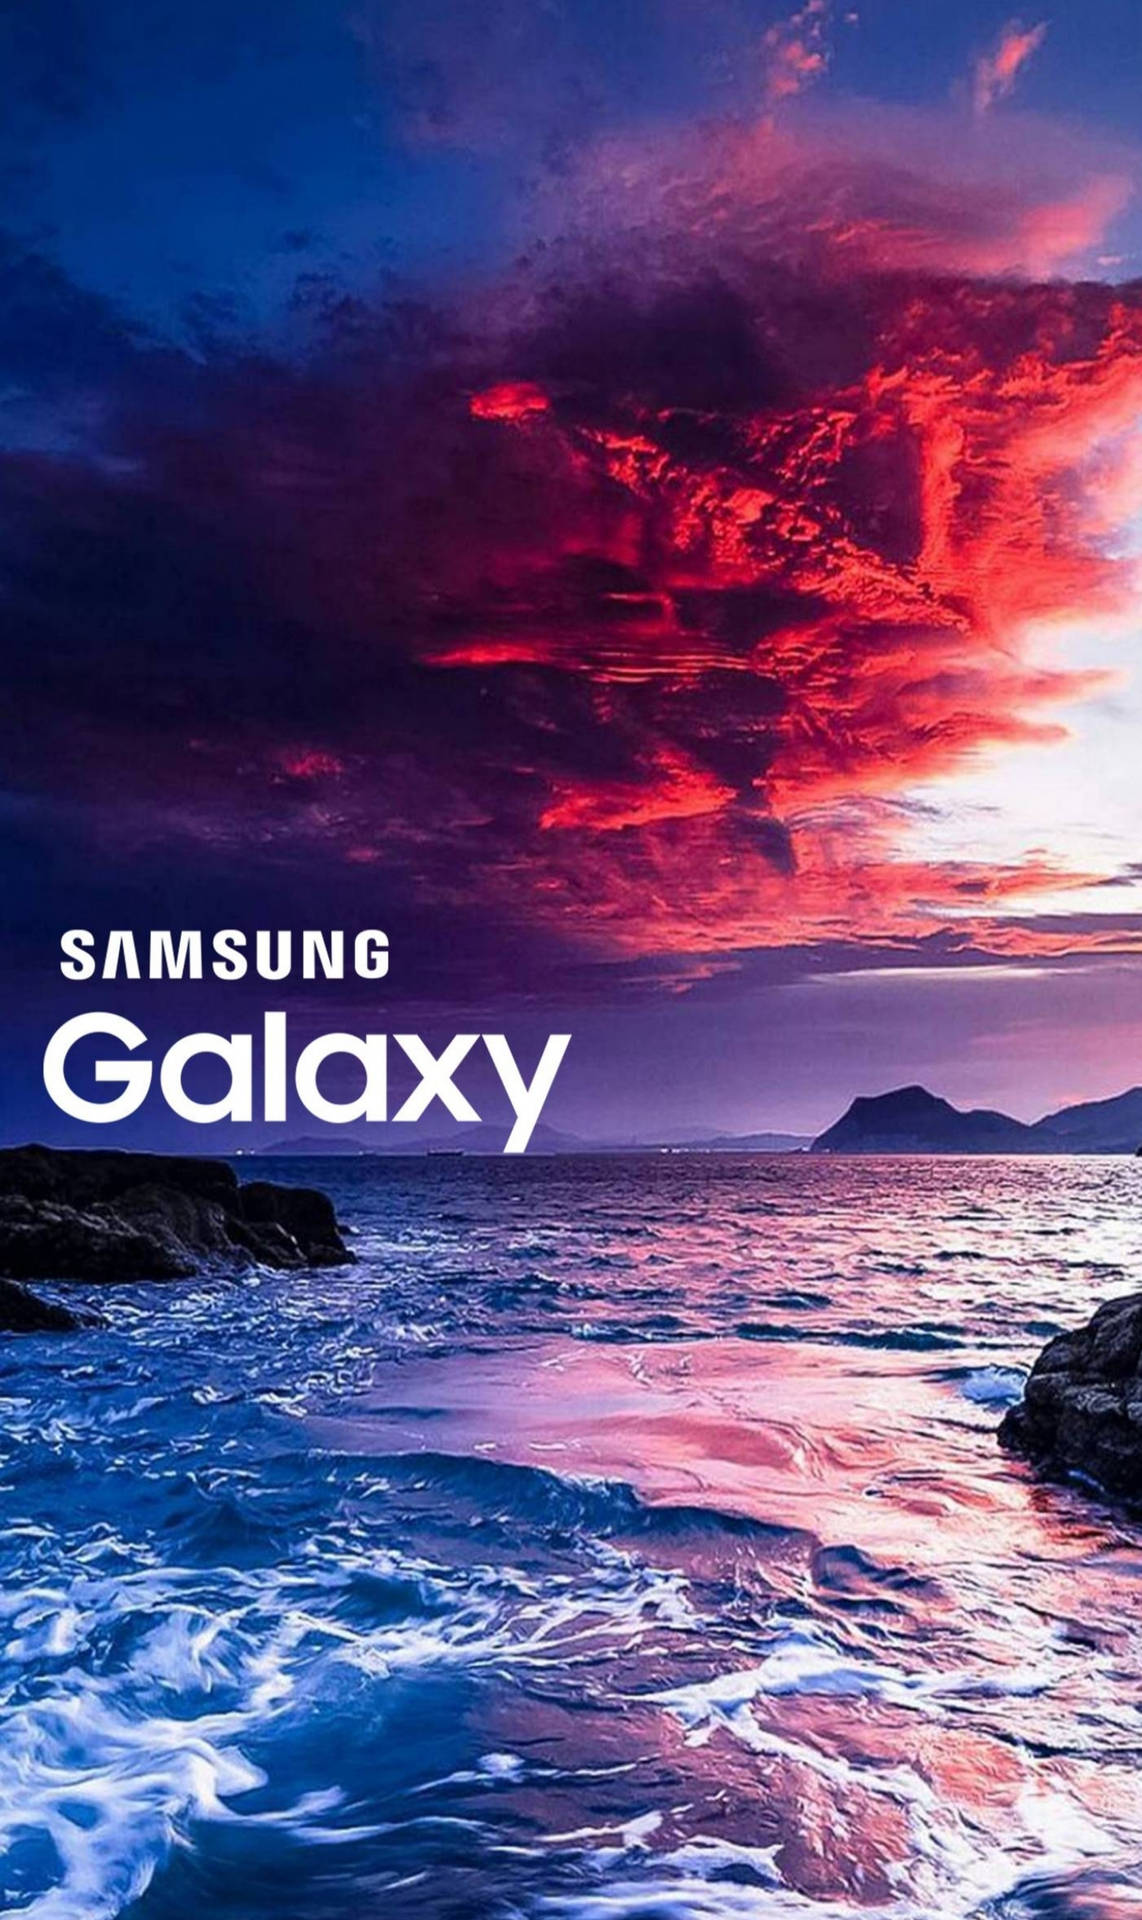 Samsung Galaxy Sunset Over Ocean Background